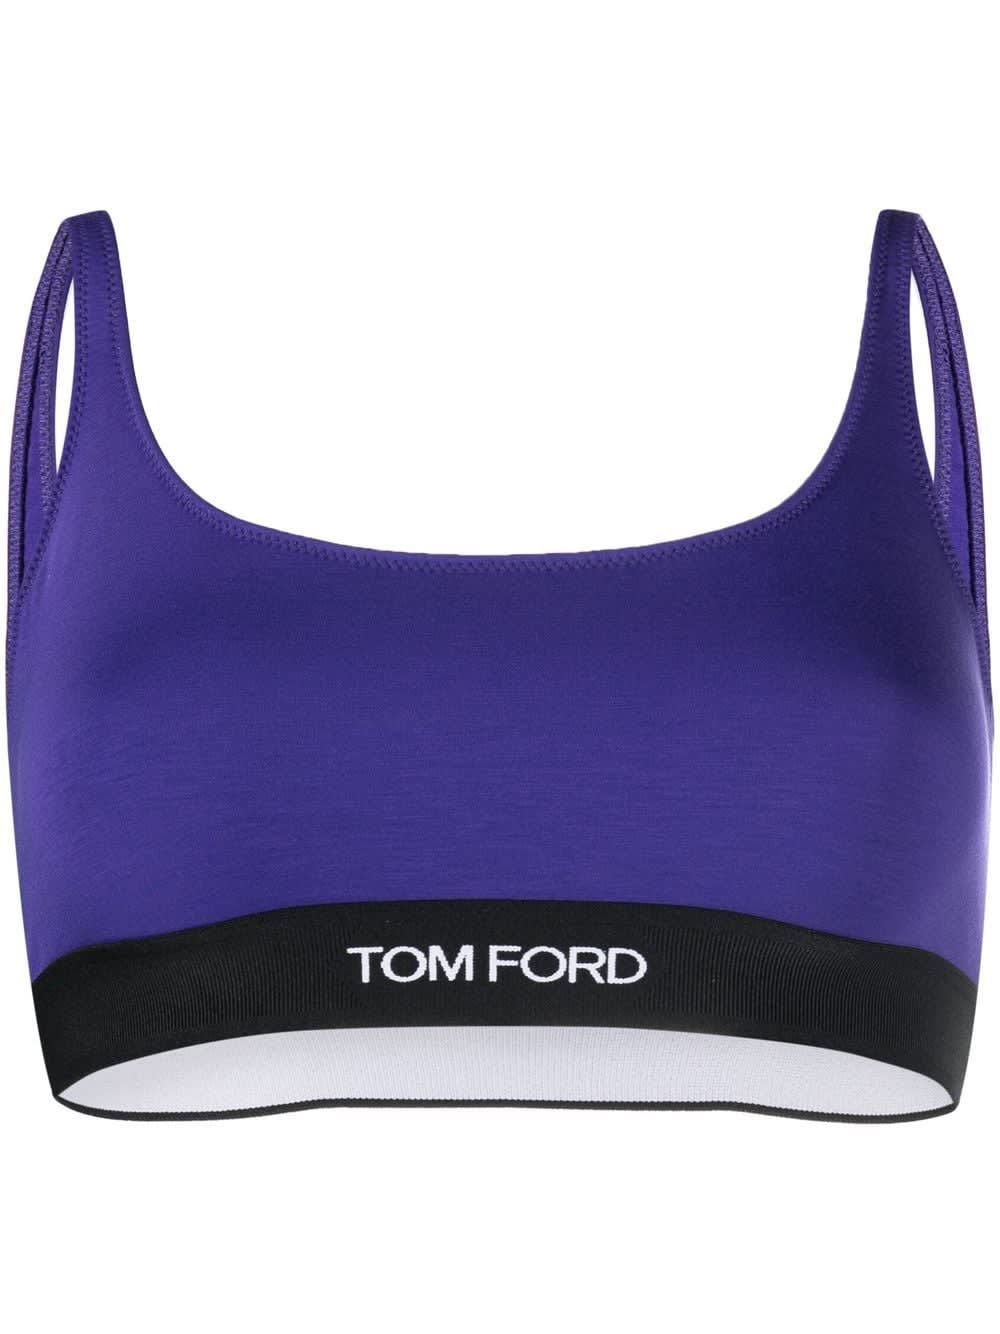 TOM FORD Iridescent Bra in Light Violet